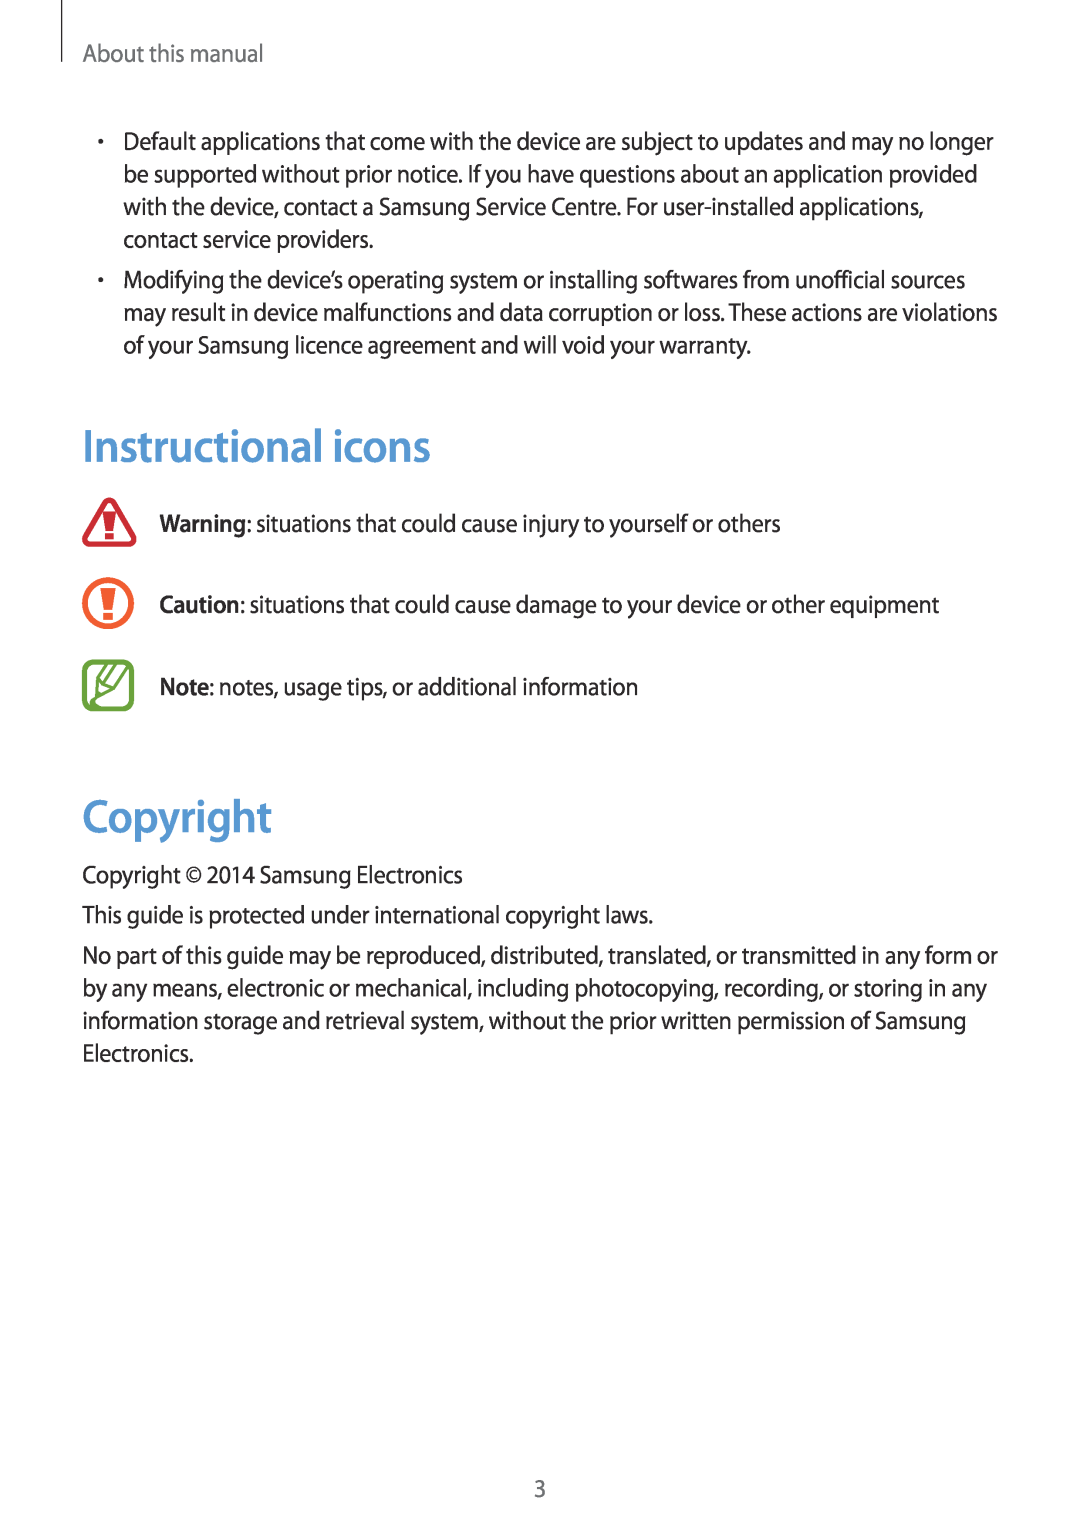 Samsung SM-T3150MKADBT, SM-T3150ZWAVD2, SM-T3150ZWADBT, SM-T3150ZWADTM Instructional icons, Copyright, About this manual 